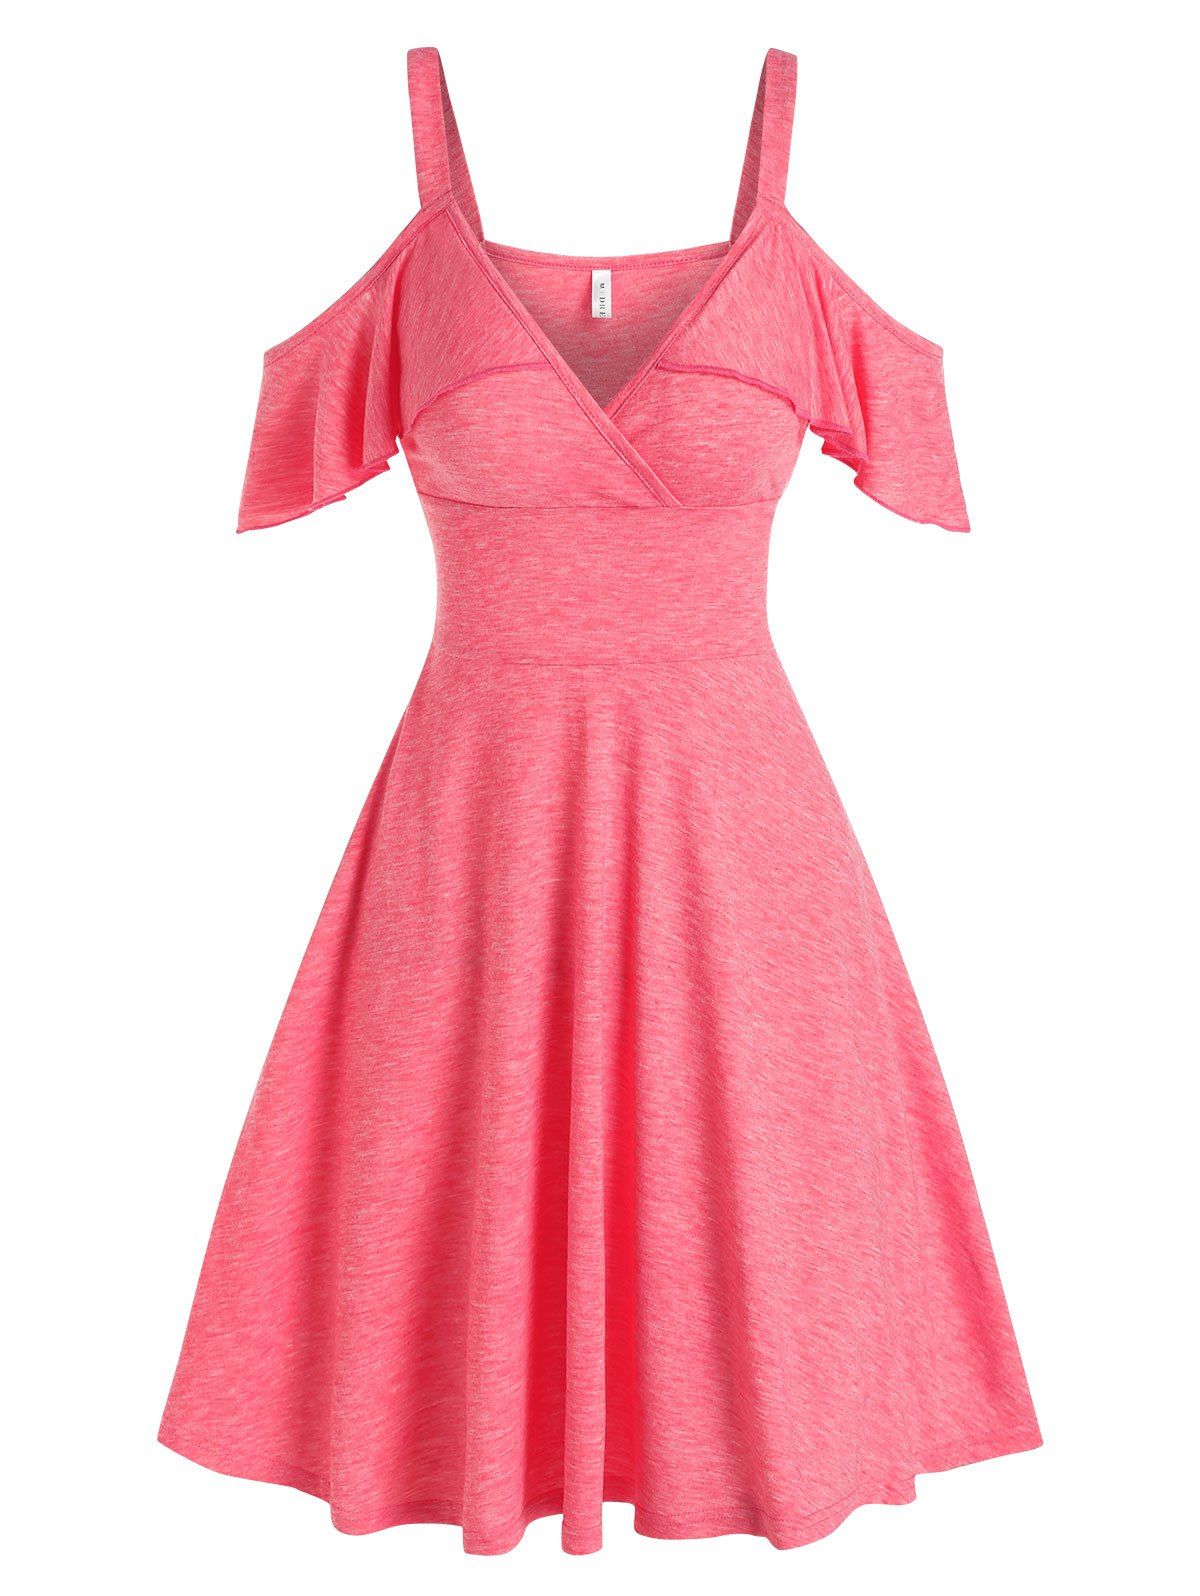 Ruffled Cold Shoulder Mini Dress - LIGHT PINK M